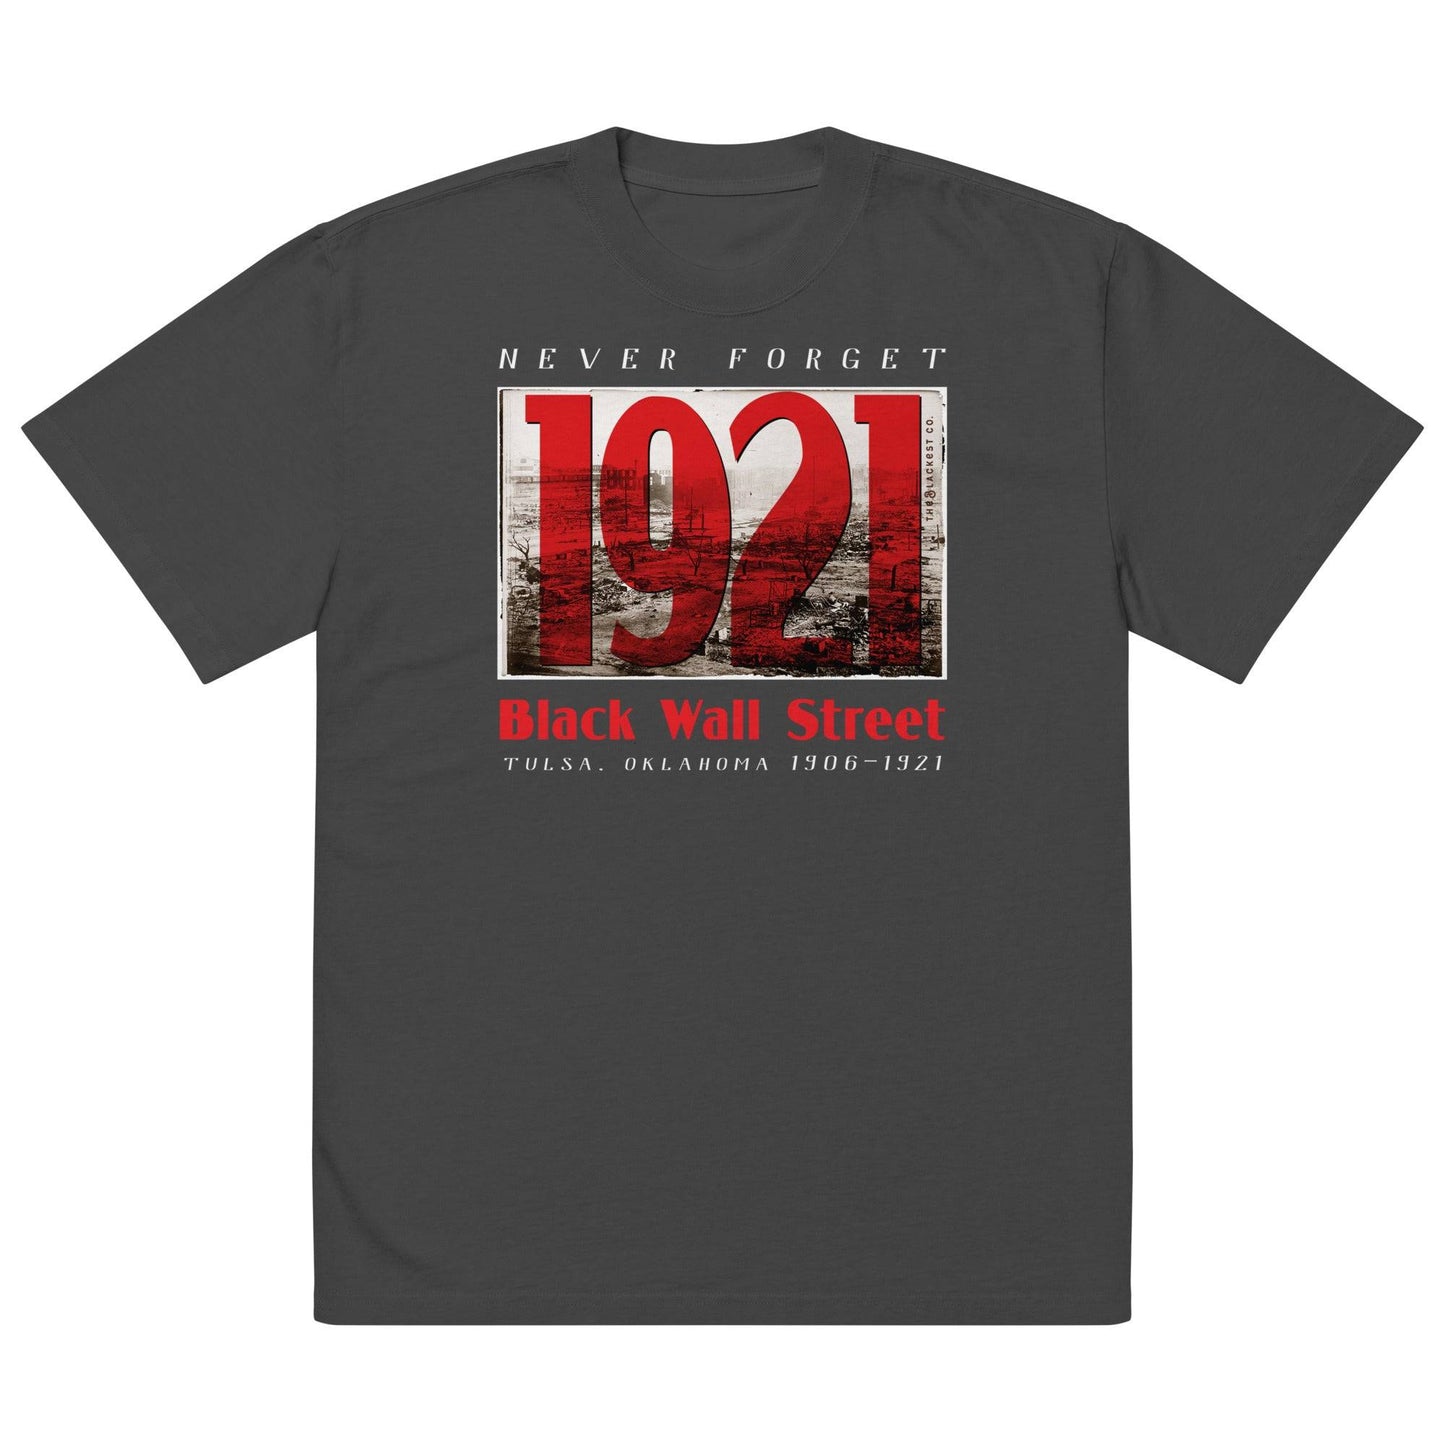 Black Wall Street 1921 Oversized Faded T Shirt